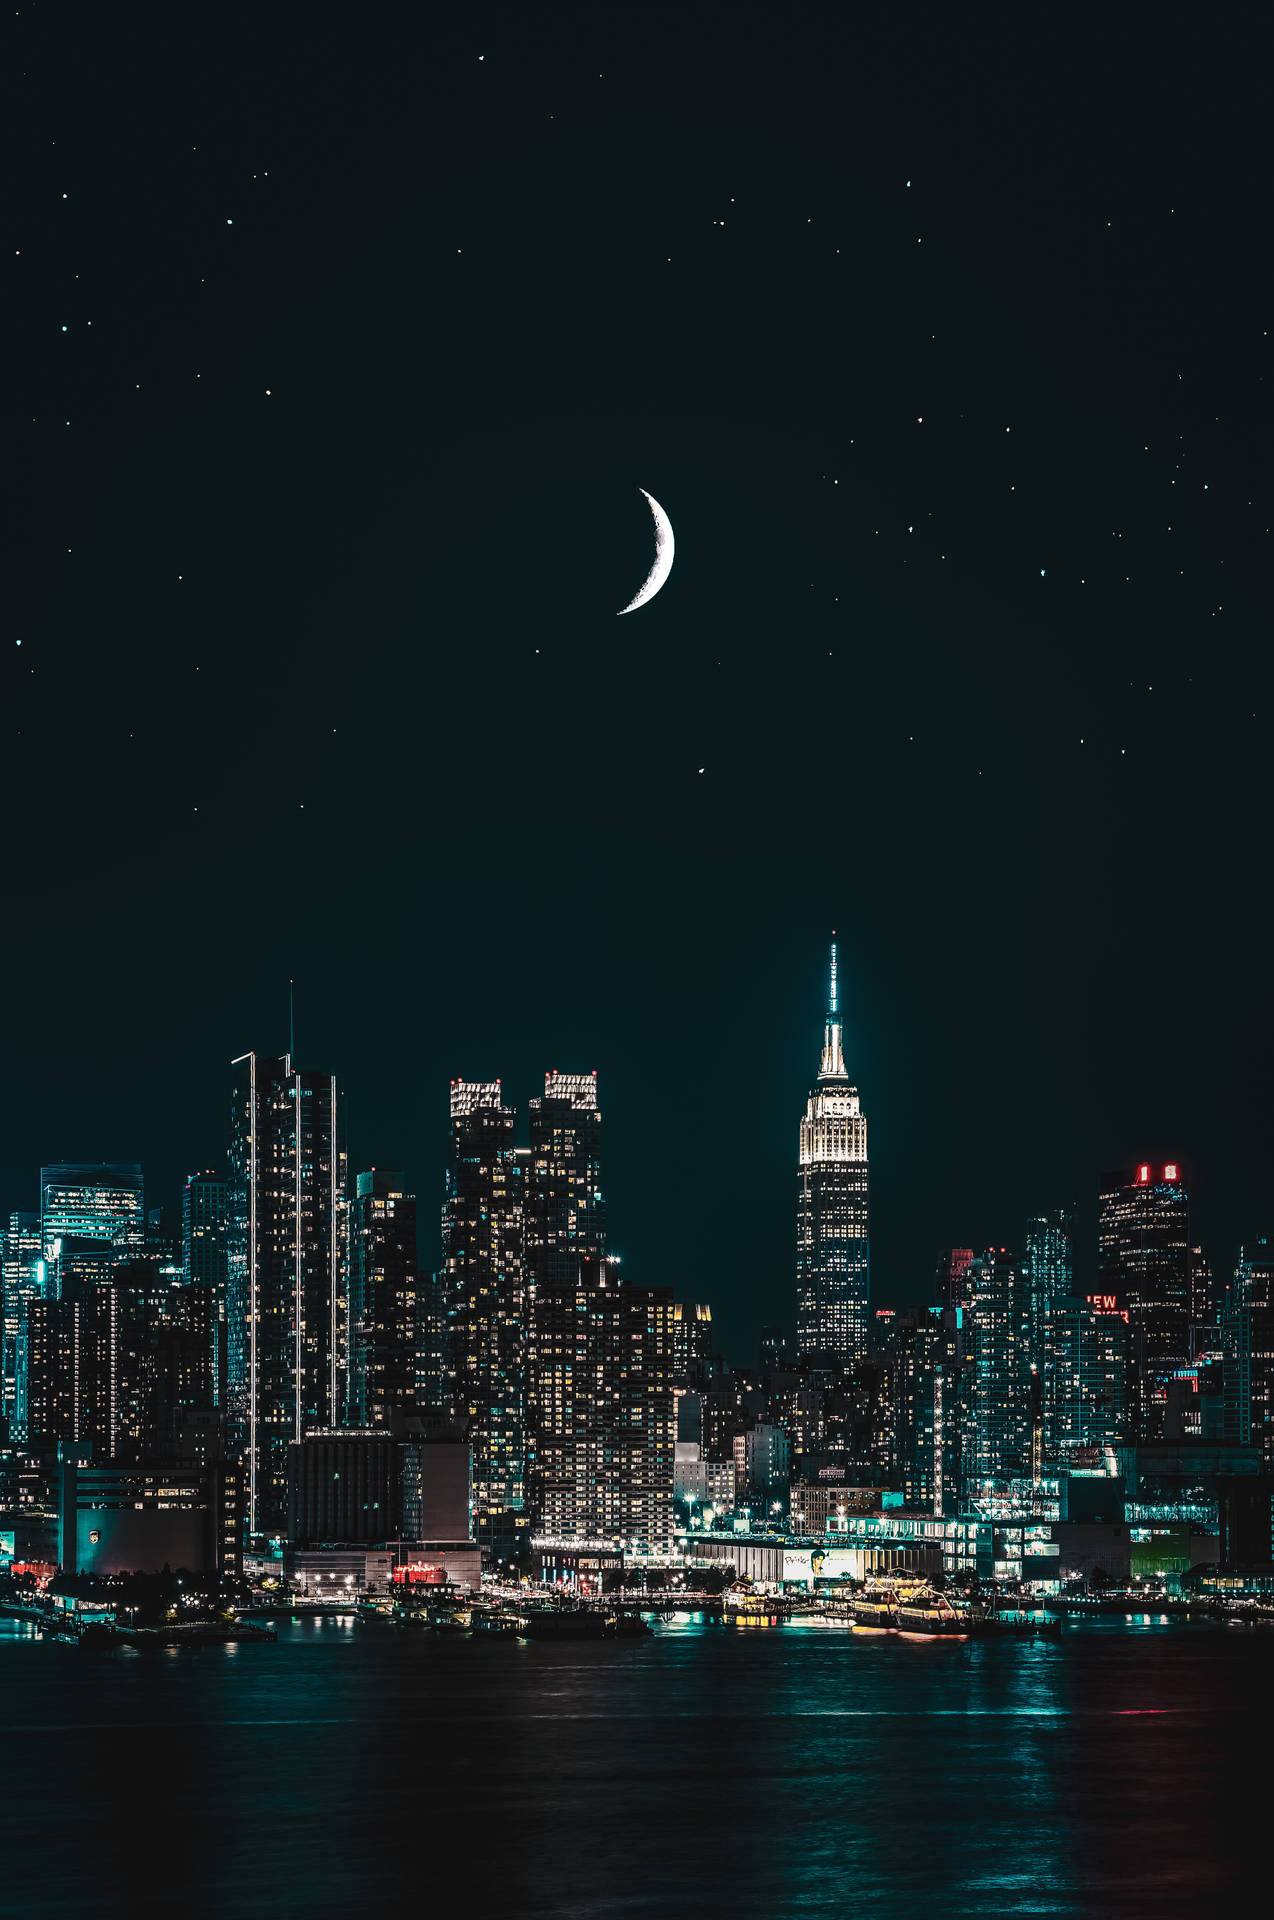 Iphone 11 Pro Max 4K City Night Wallpaper